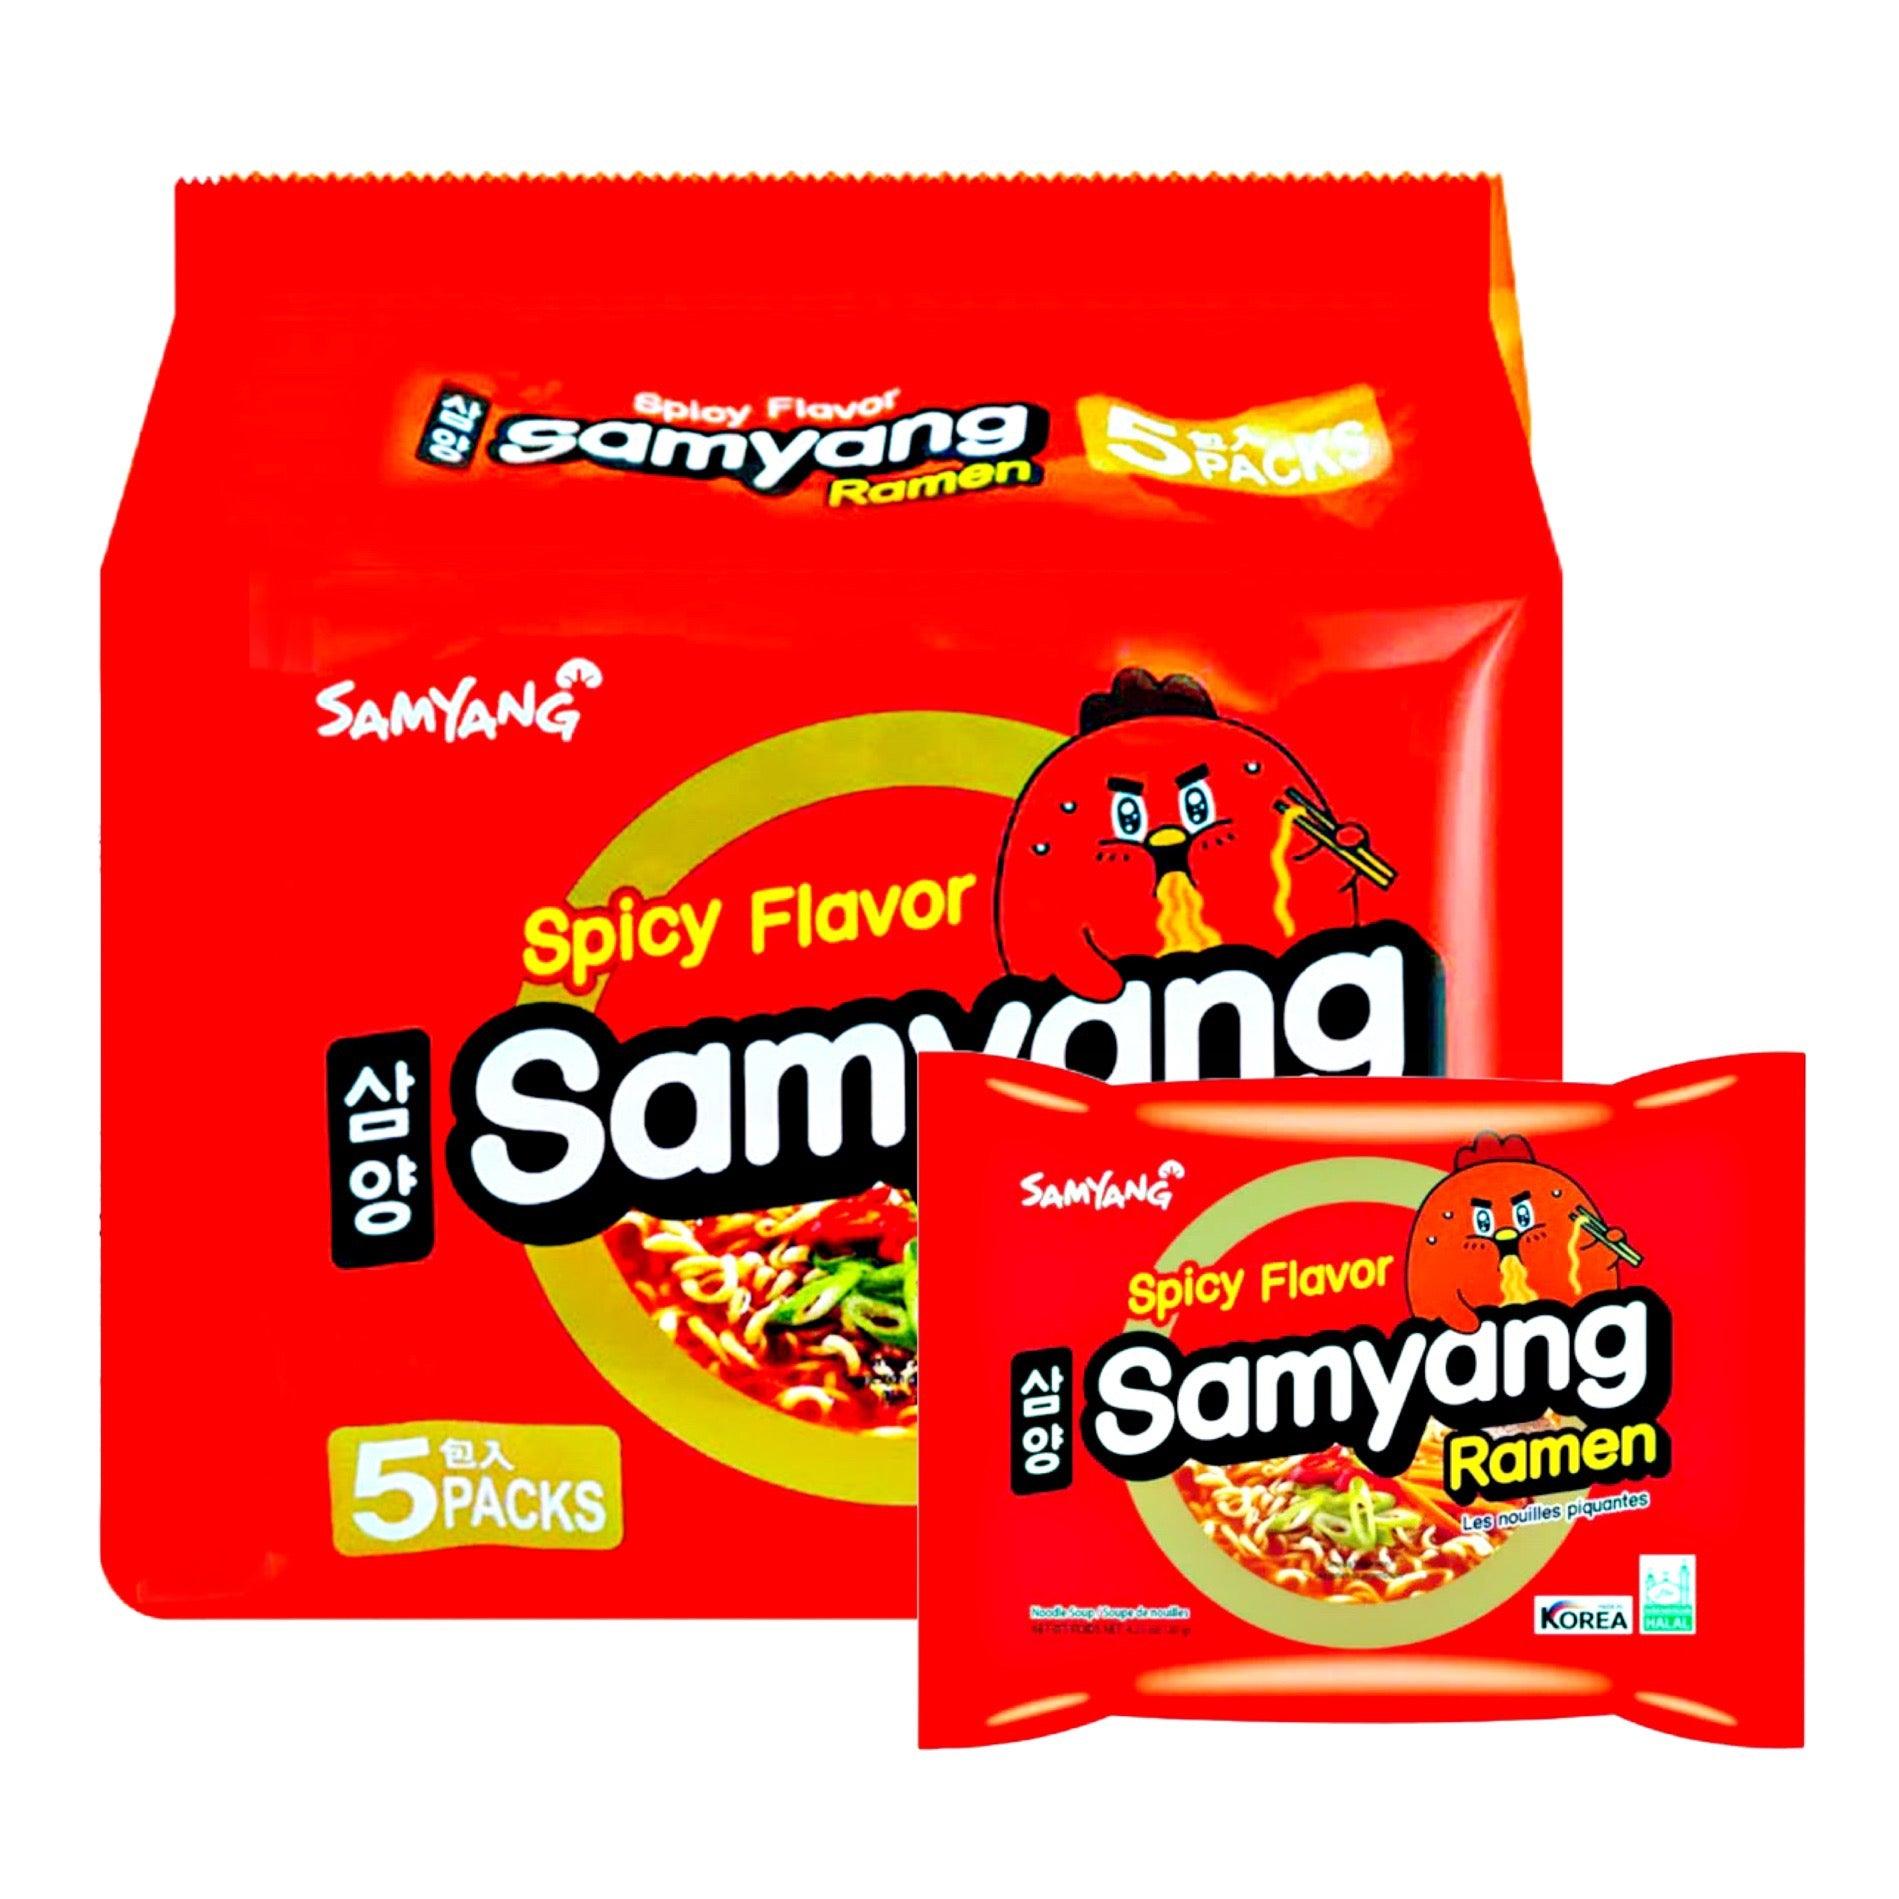 Samyang Ramen Spicy Flavor 5x120g - The Snacks Box - Asian Snacks Store - The Snacks Box - Korean Snack - Japanese Snack